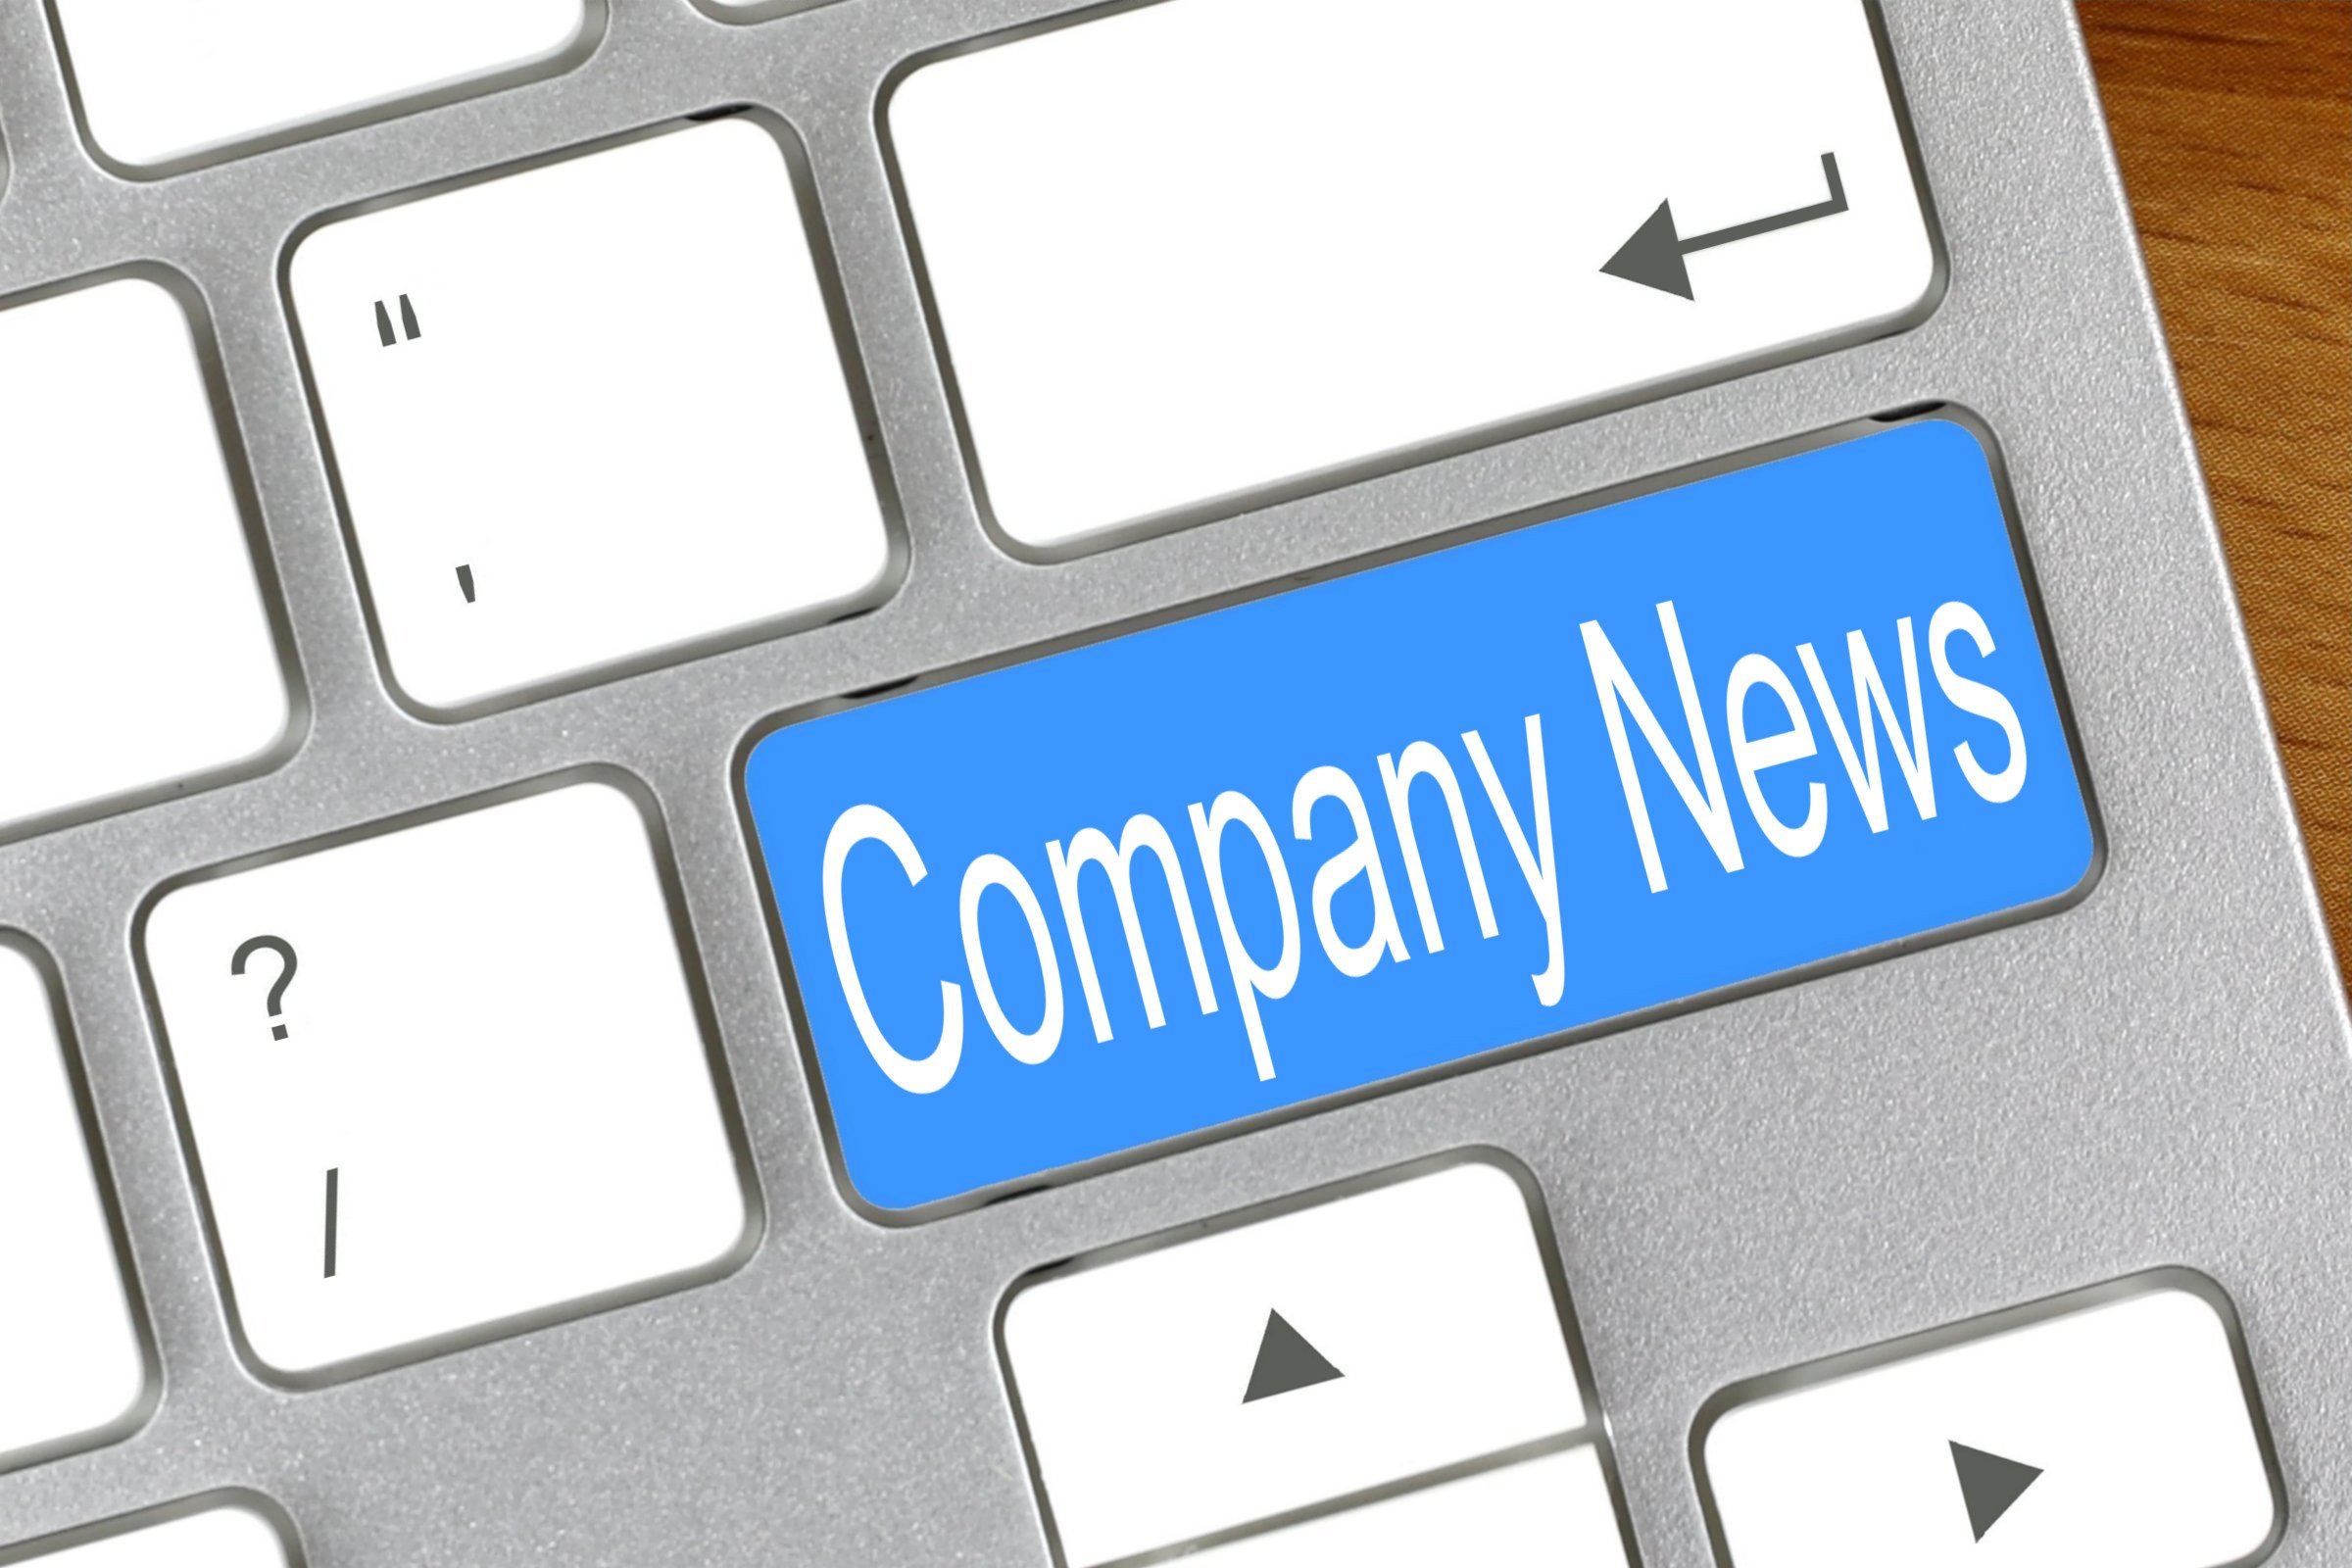 company news